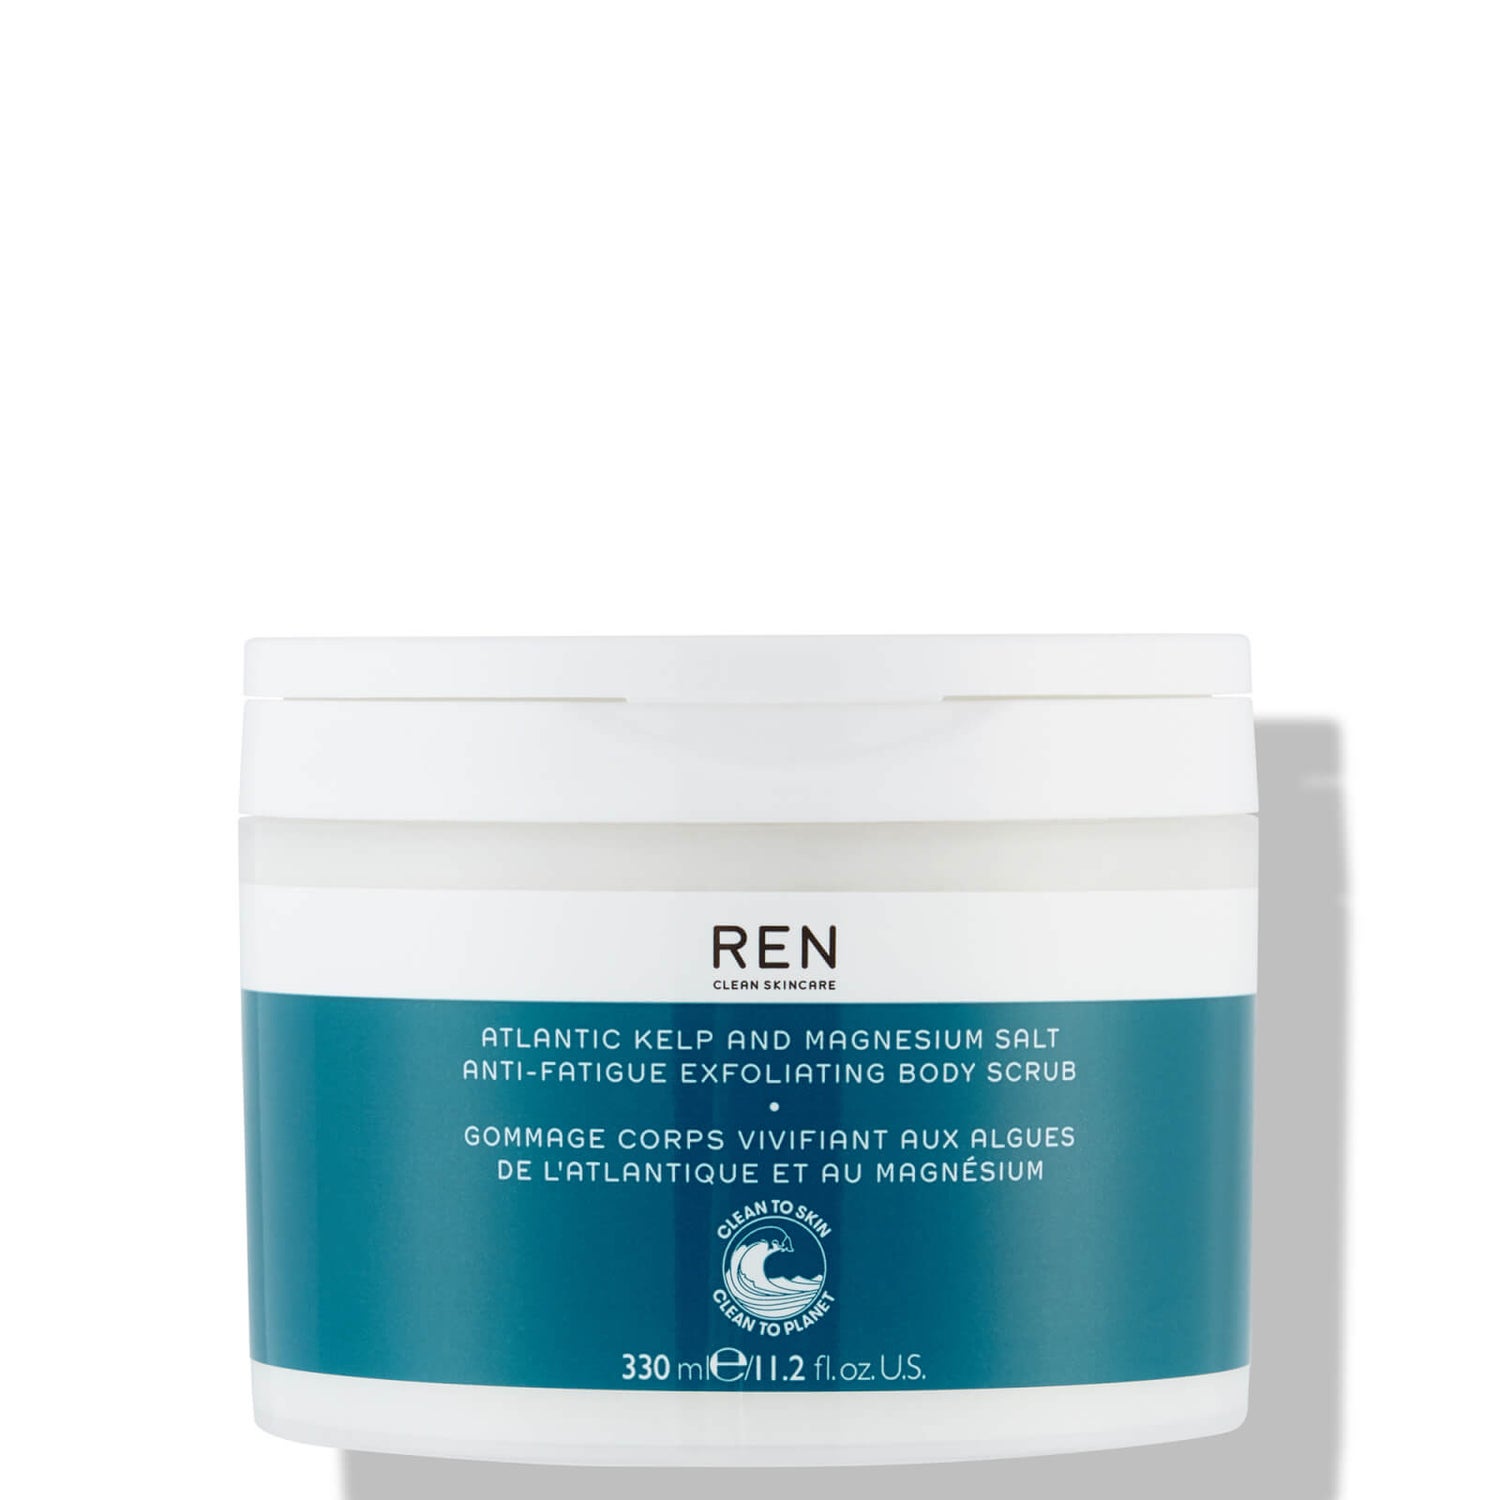 REN Skincare Atlantic Kelp and Magnesium Salt Anti-Fatigue Exfoliating Body Scrub 330 ml